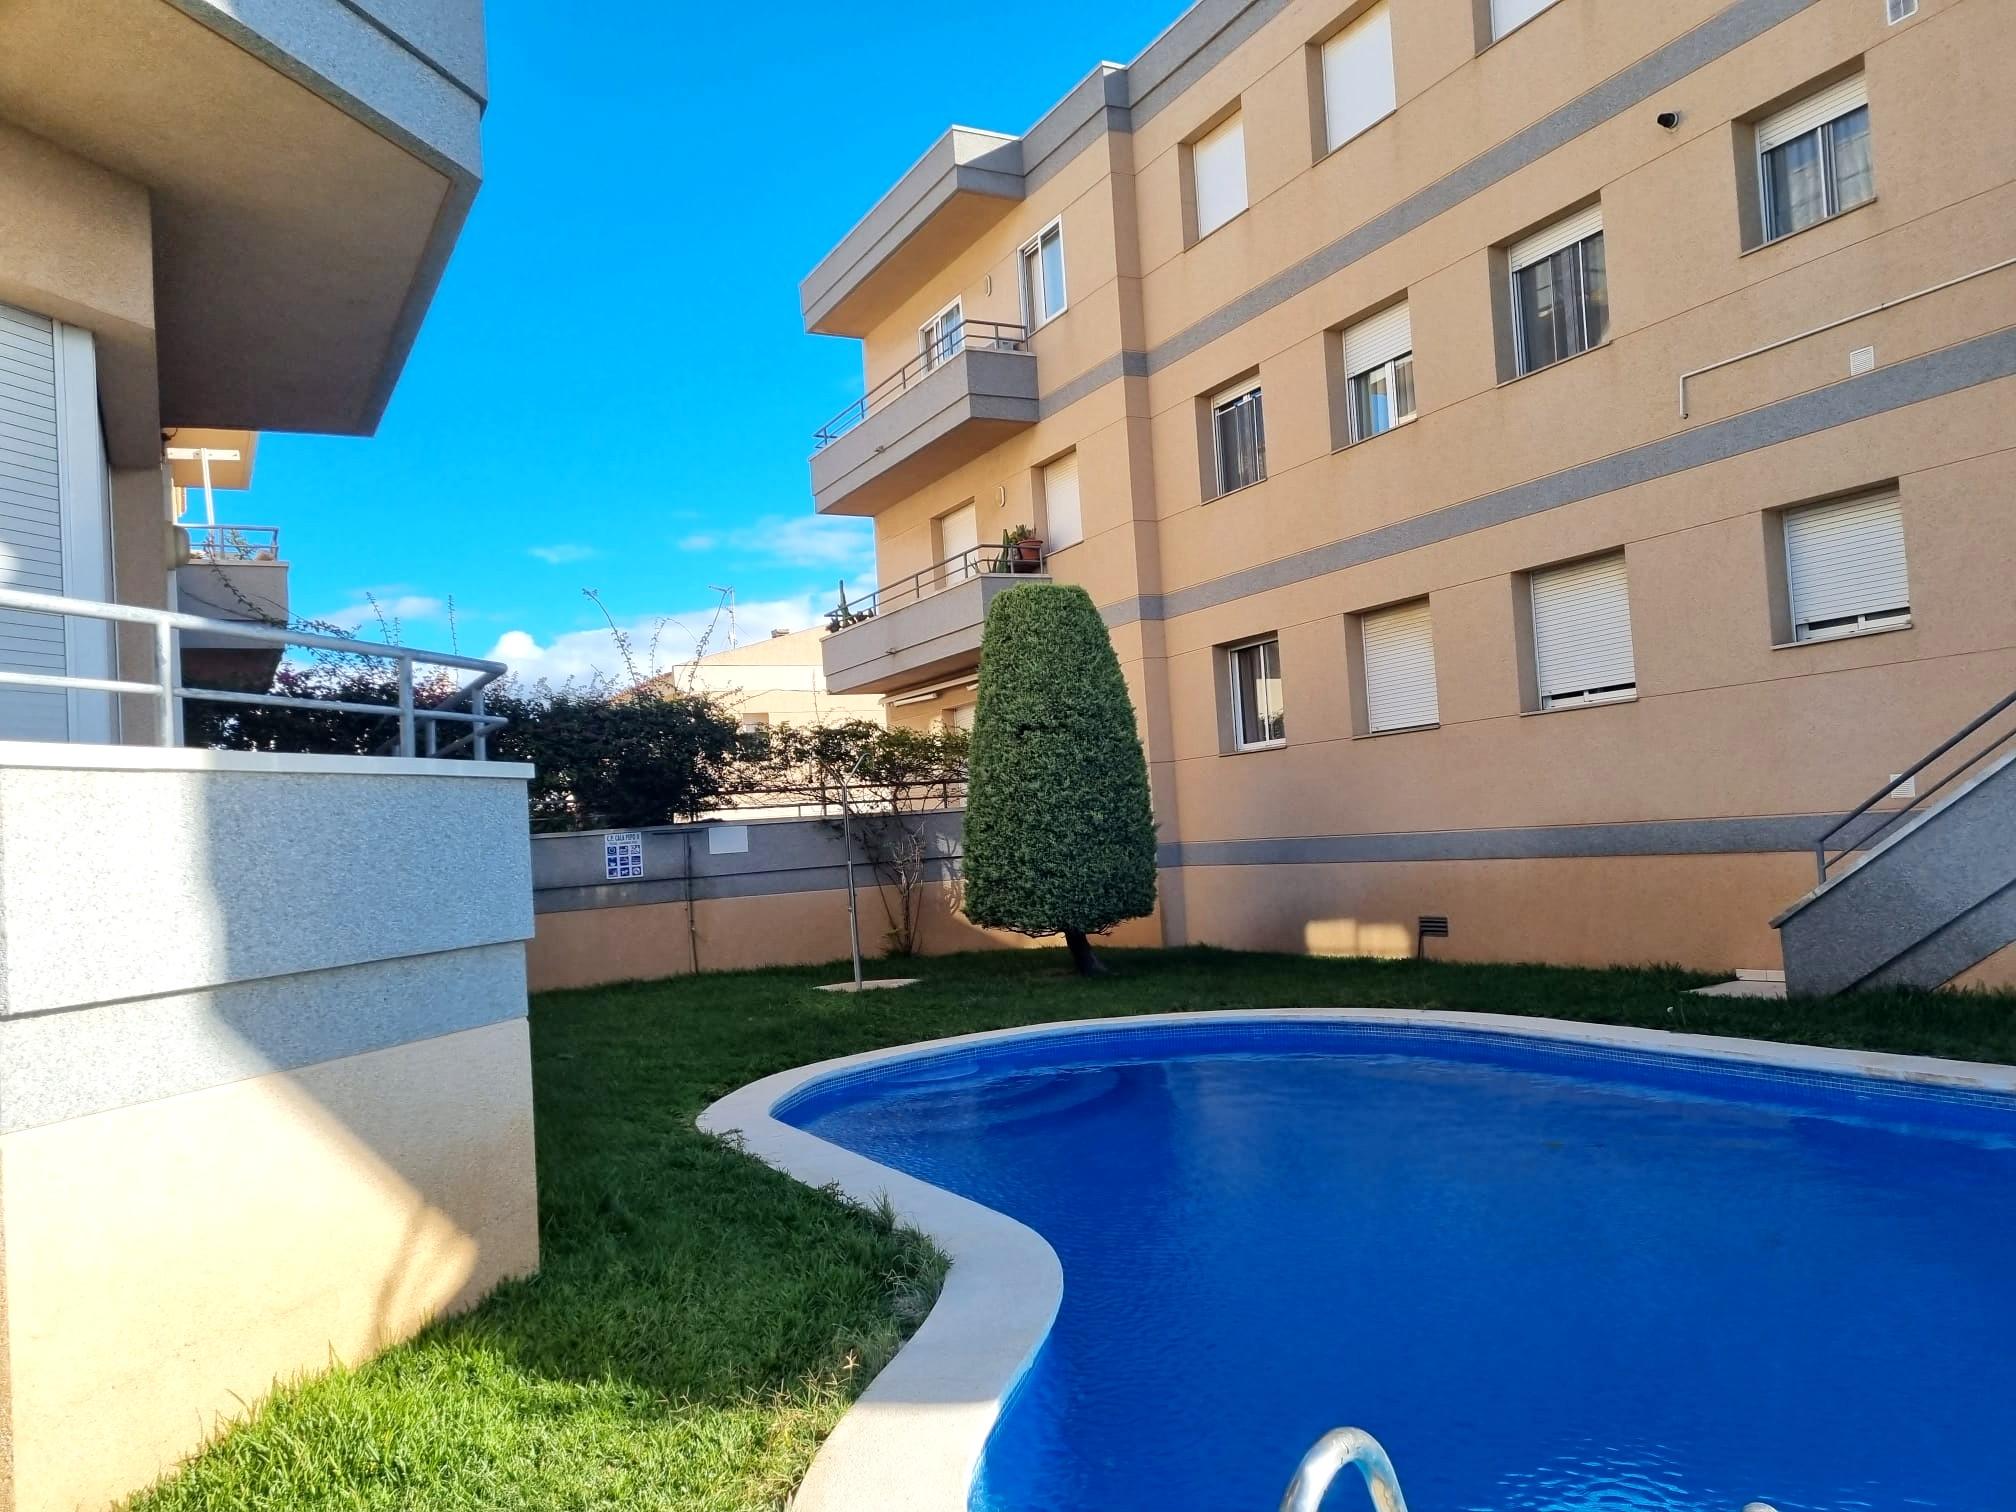 2-bedroom flat with pool and views in L'Ametlla de Mar